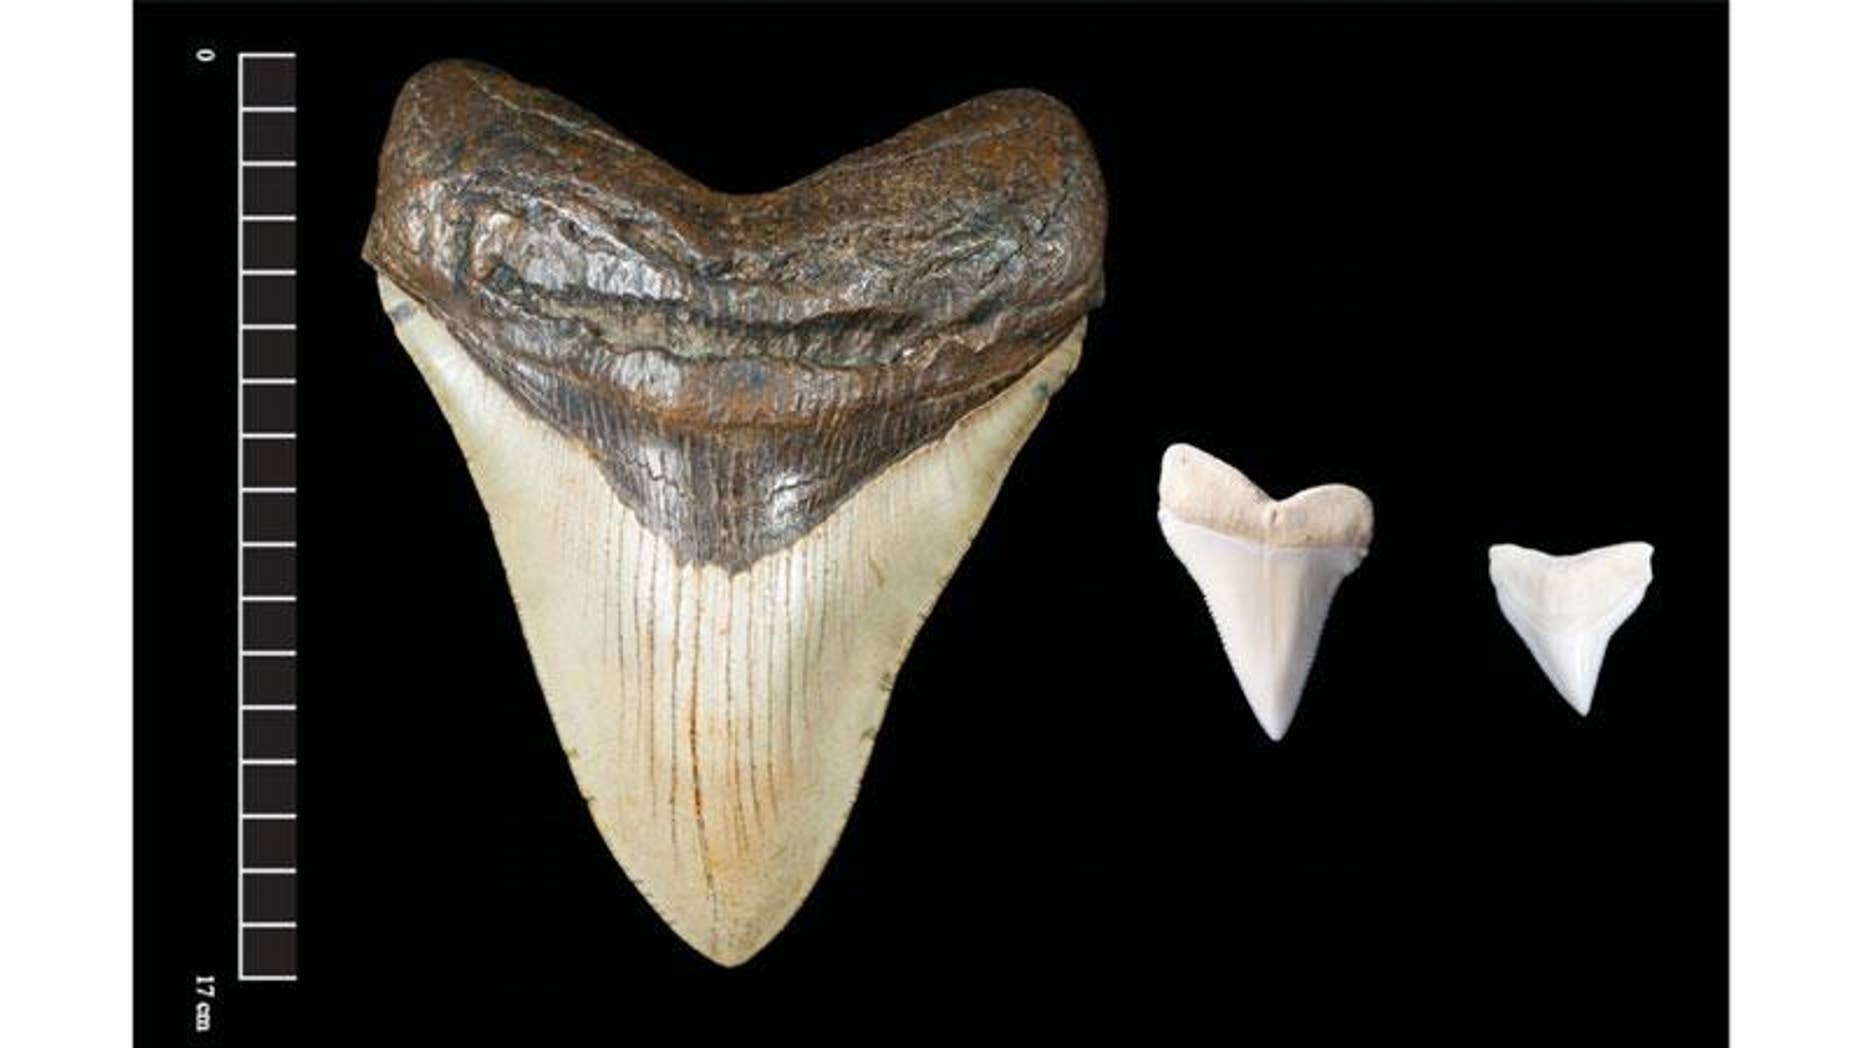 Giant megalodon shark teeth may have inspired Mayan monster myths | Fox